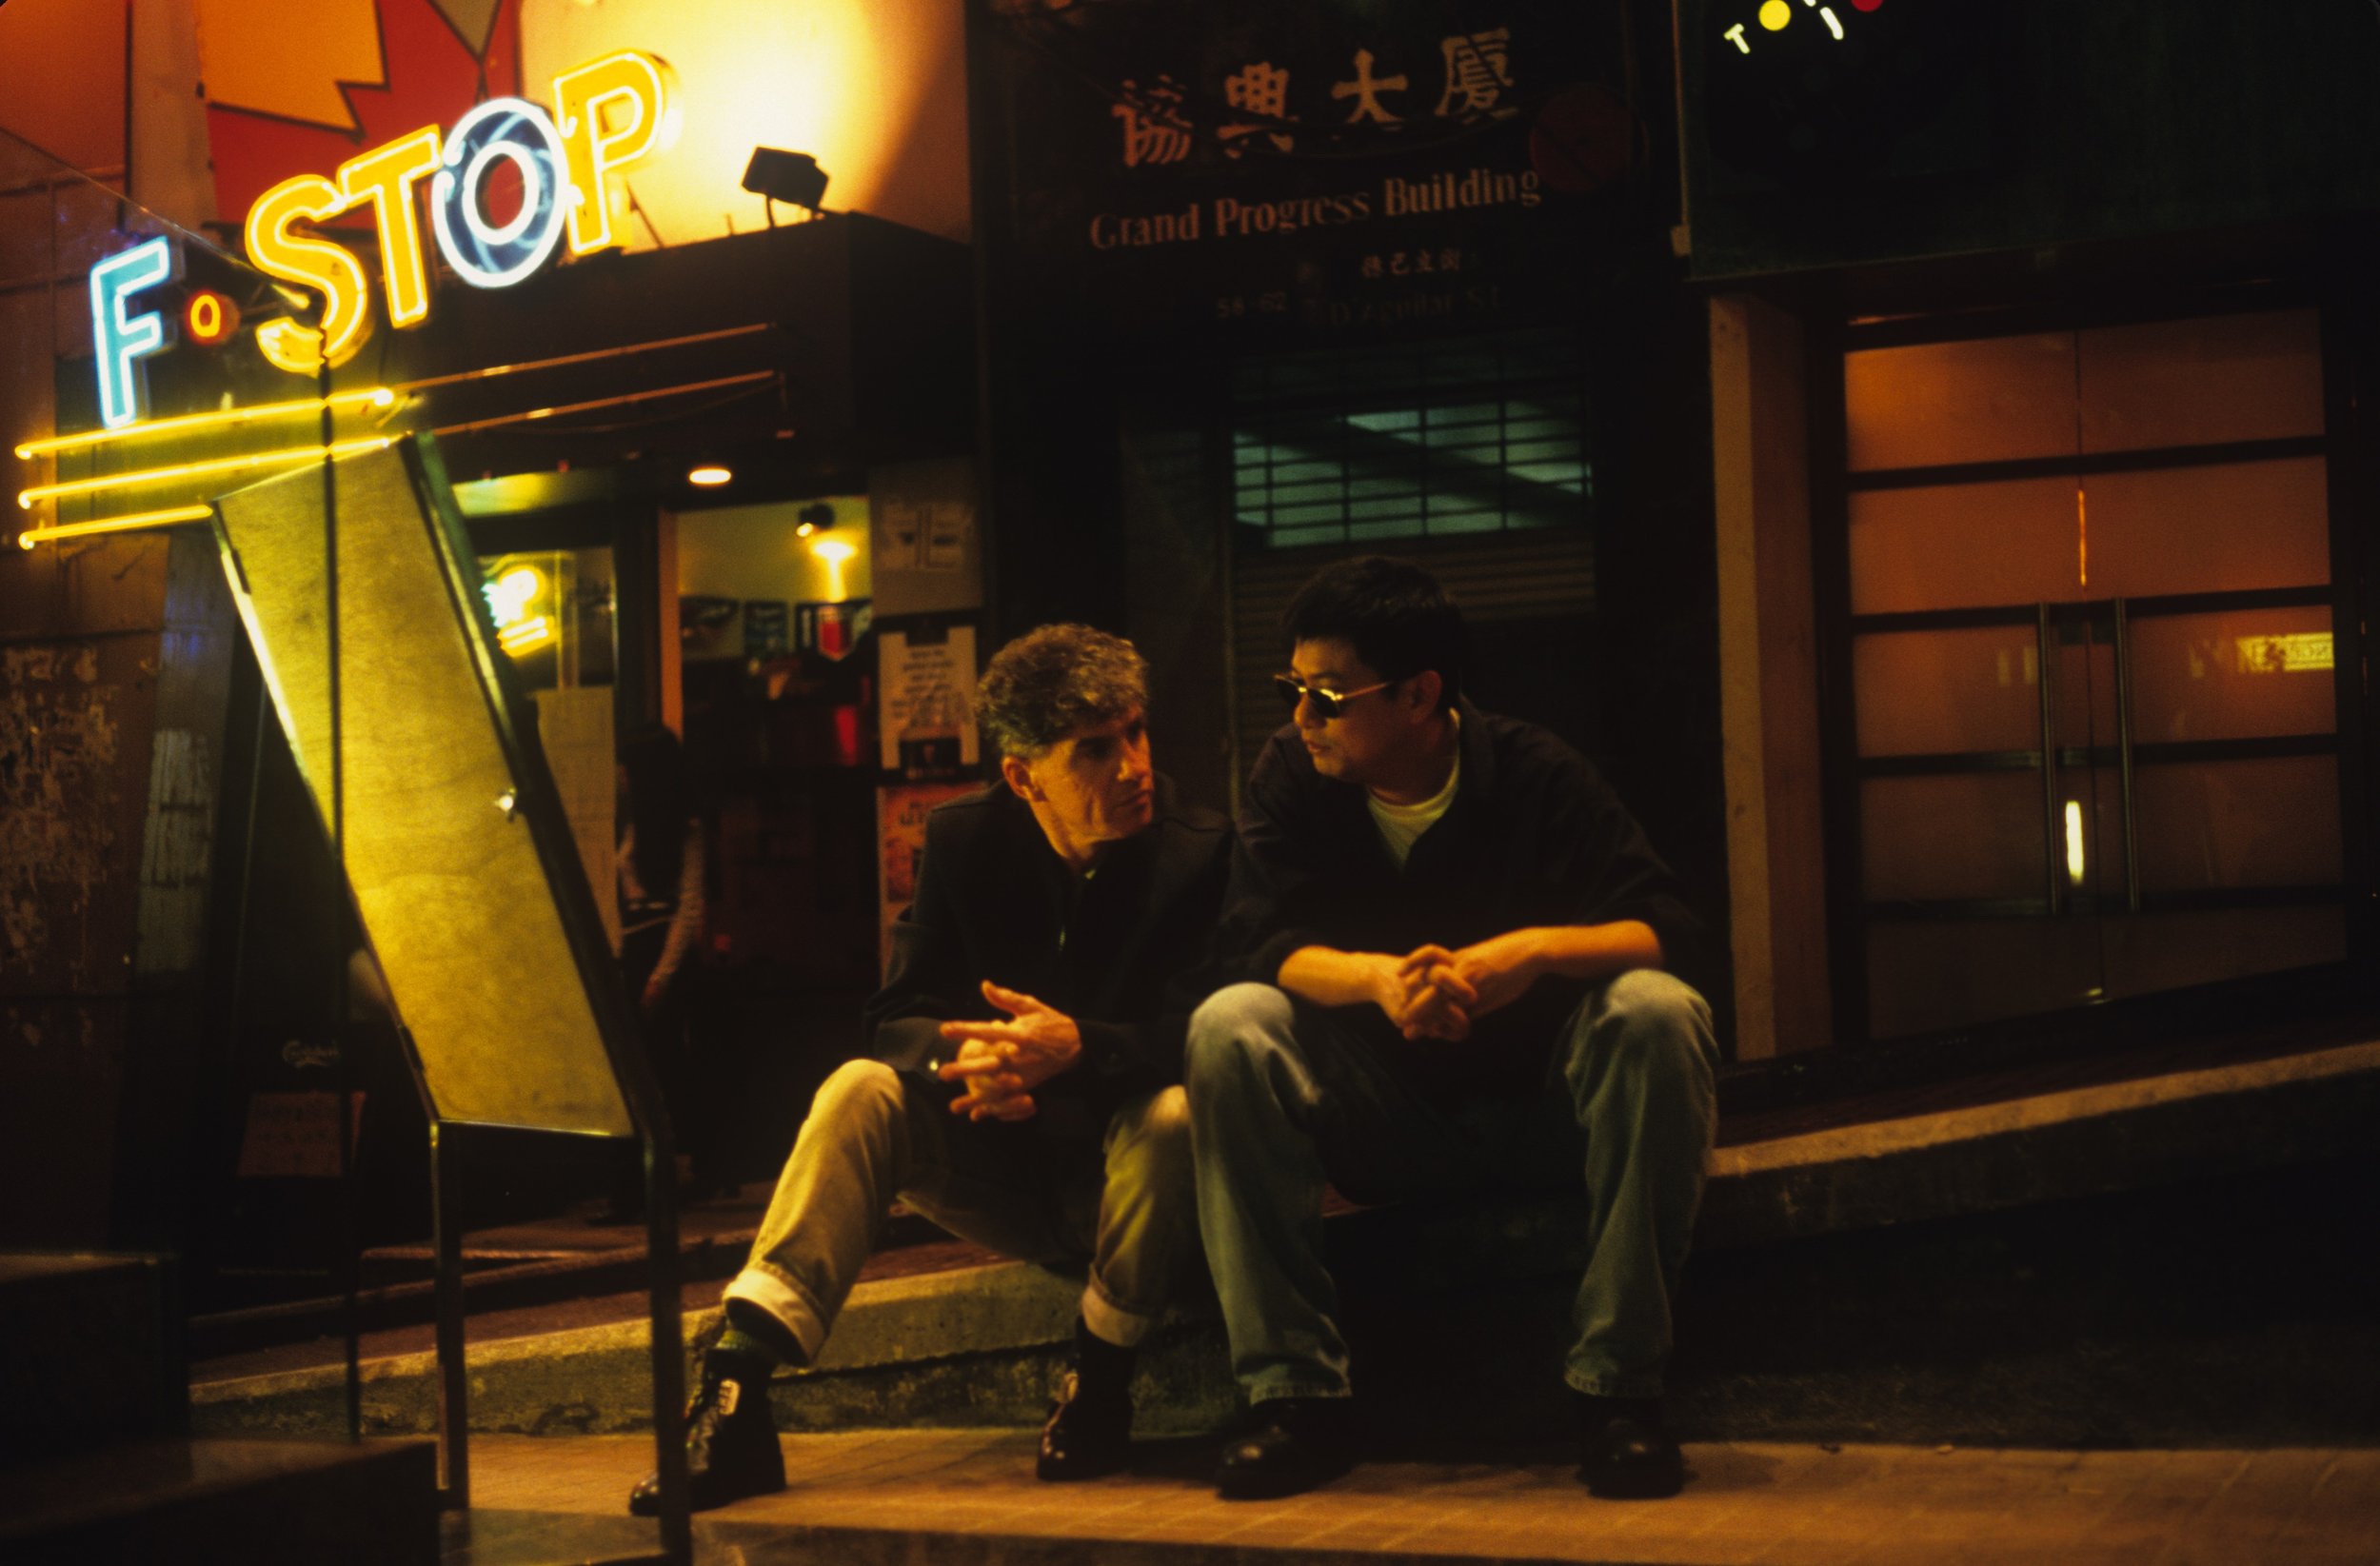 Greg Girard, Cinematographer Christoper Doyle and director Wong Kar Wai, Lan Kwai Fong, Hong Kong 1995, Courtesy of Blue Lotus Gallery